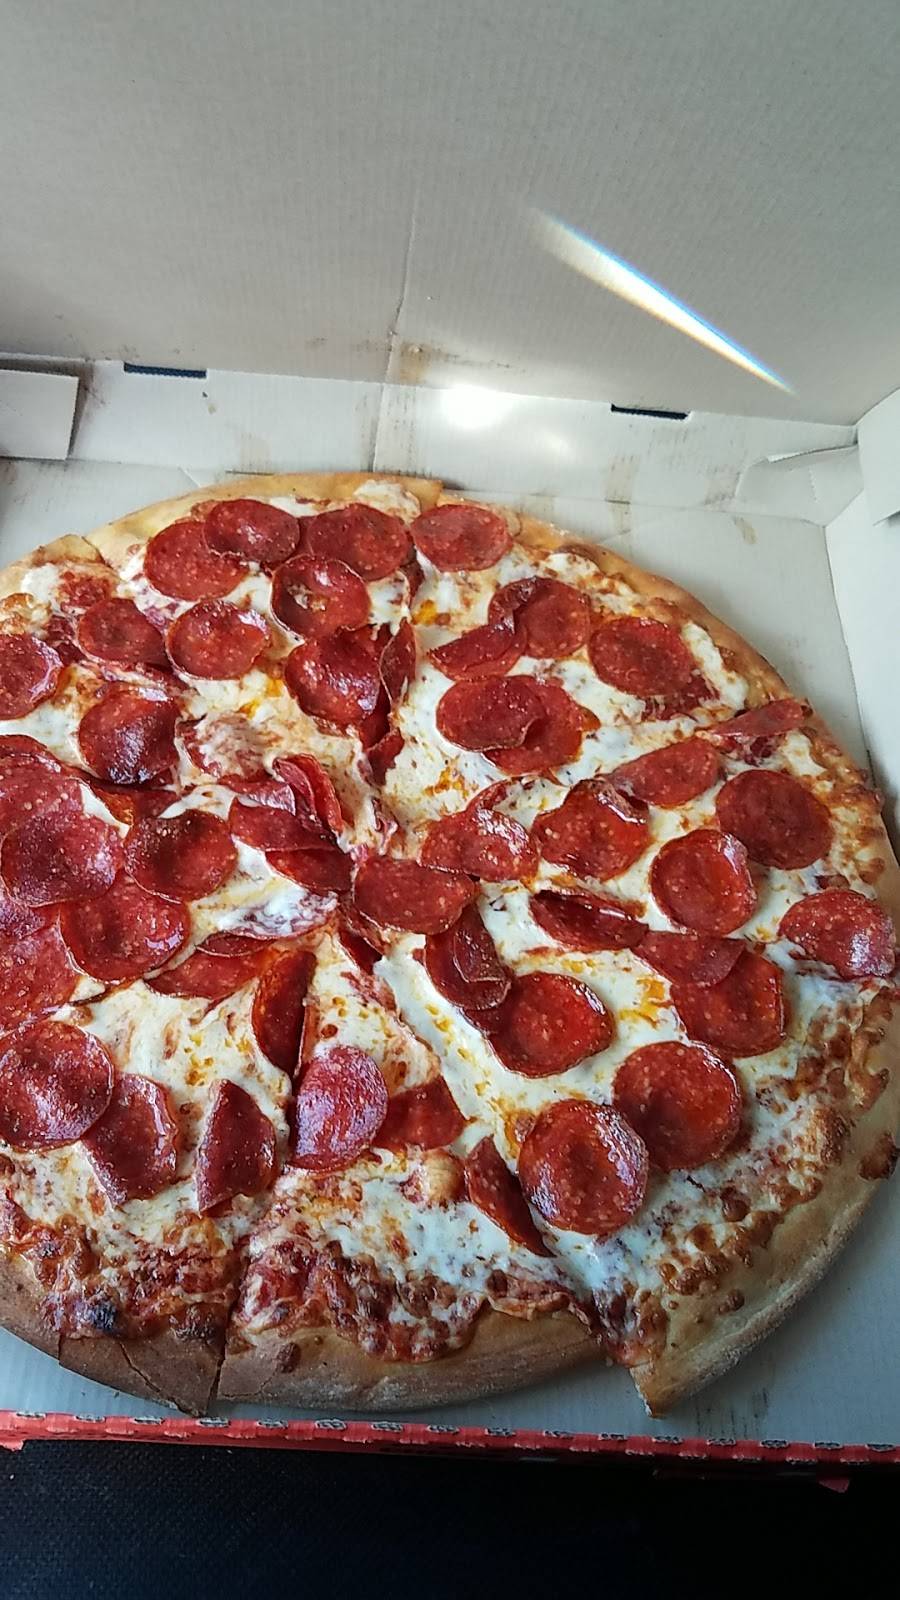 Little Caesars Pizza | 6727 Denison Ave, Cleveland, OH 44102 | Phone: (216) 651-9000